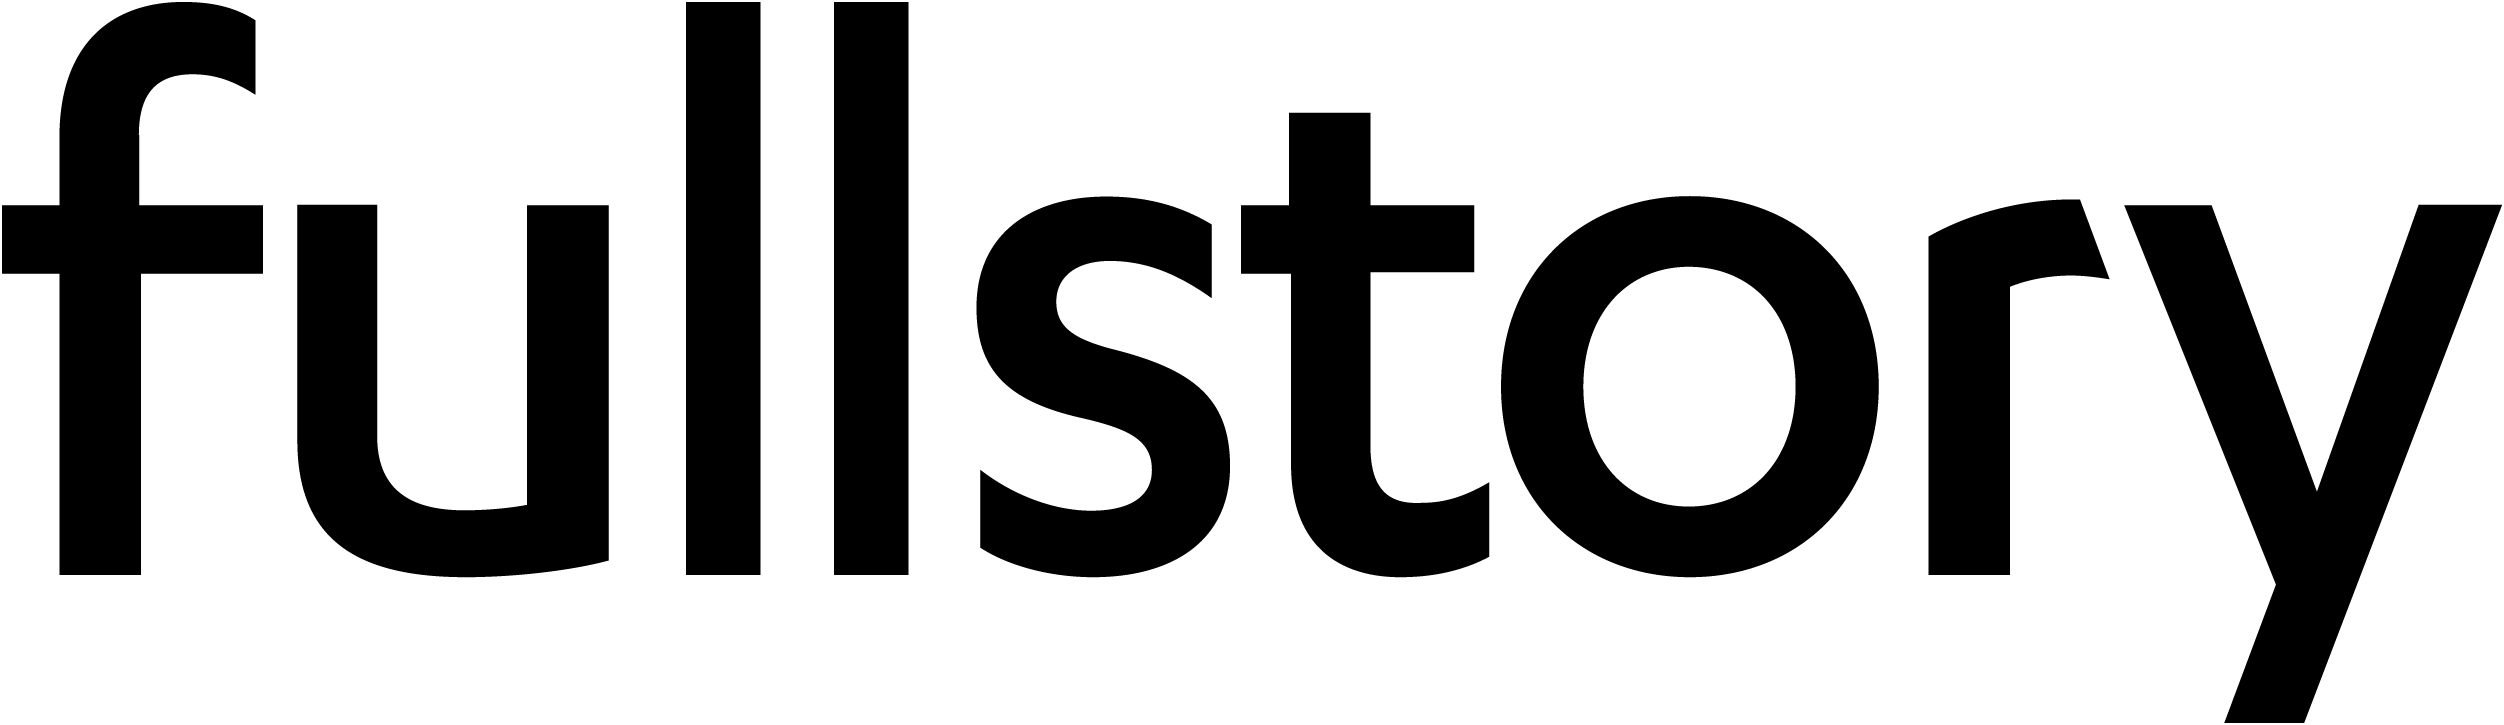 fullstory-logo-vector